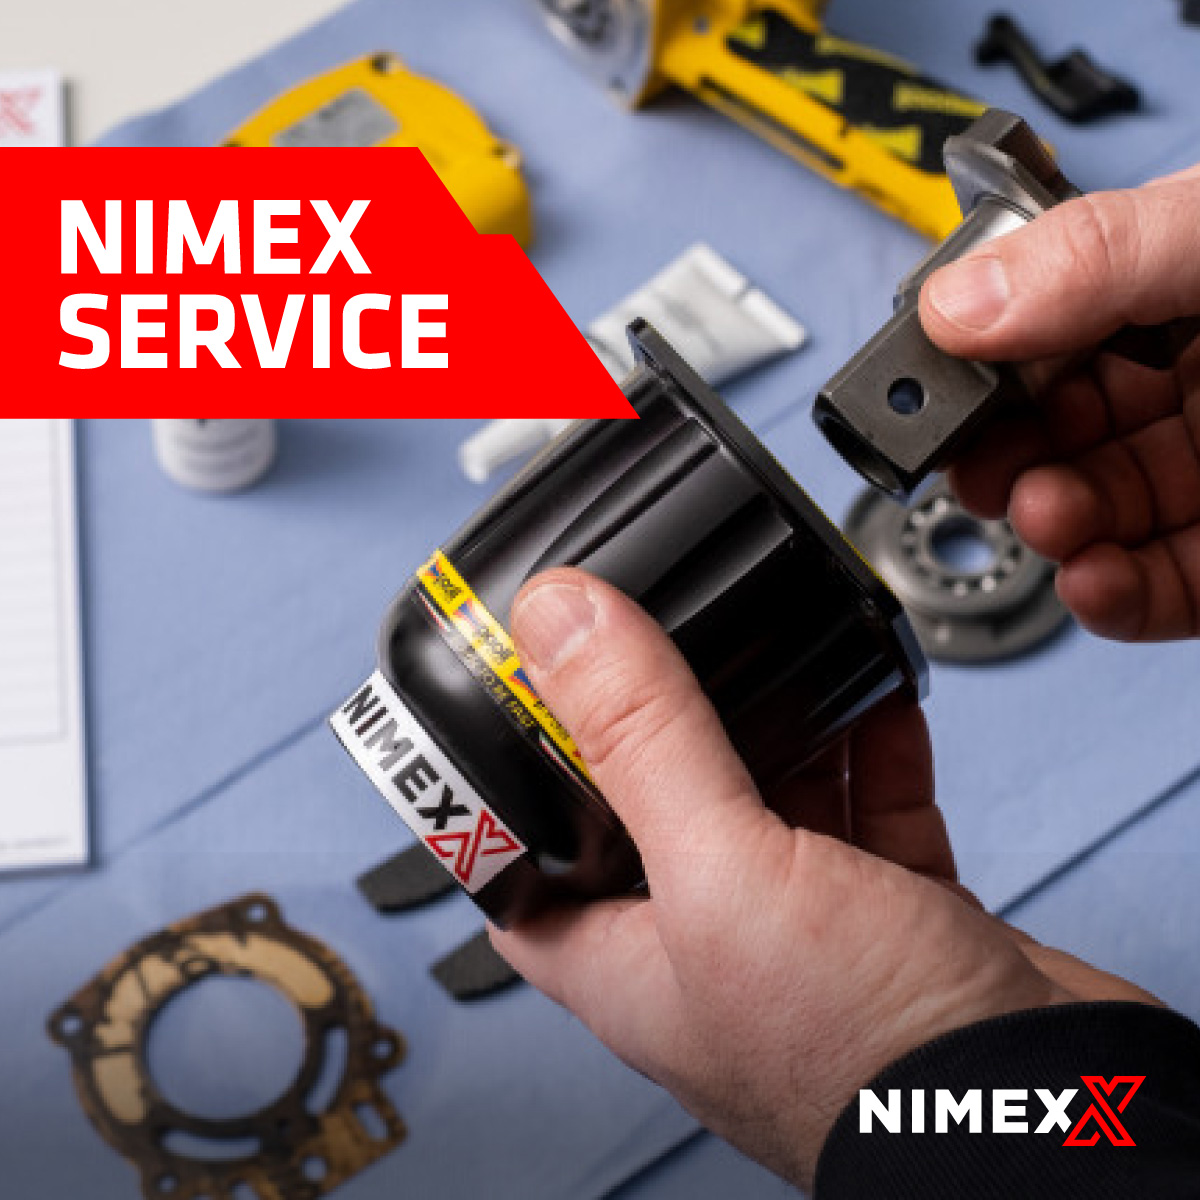 20210111_NIMEX_Service